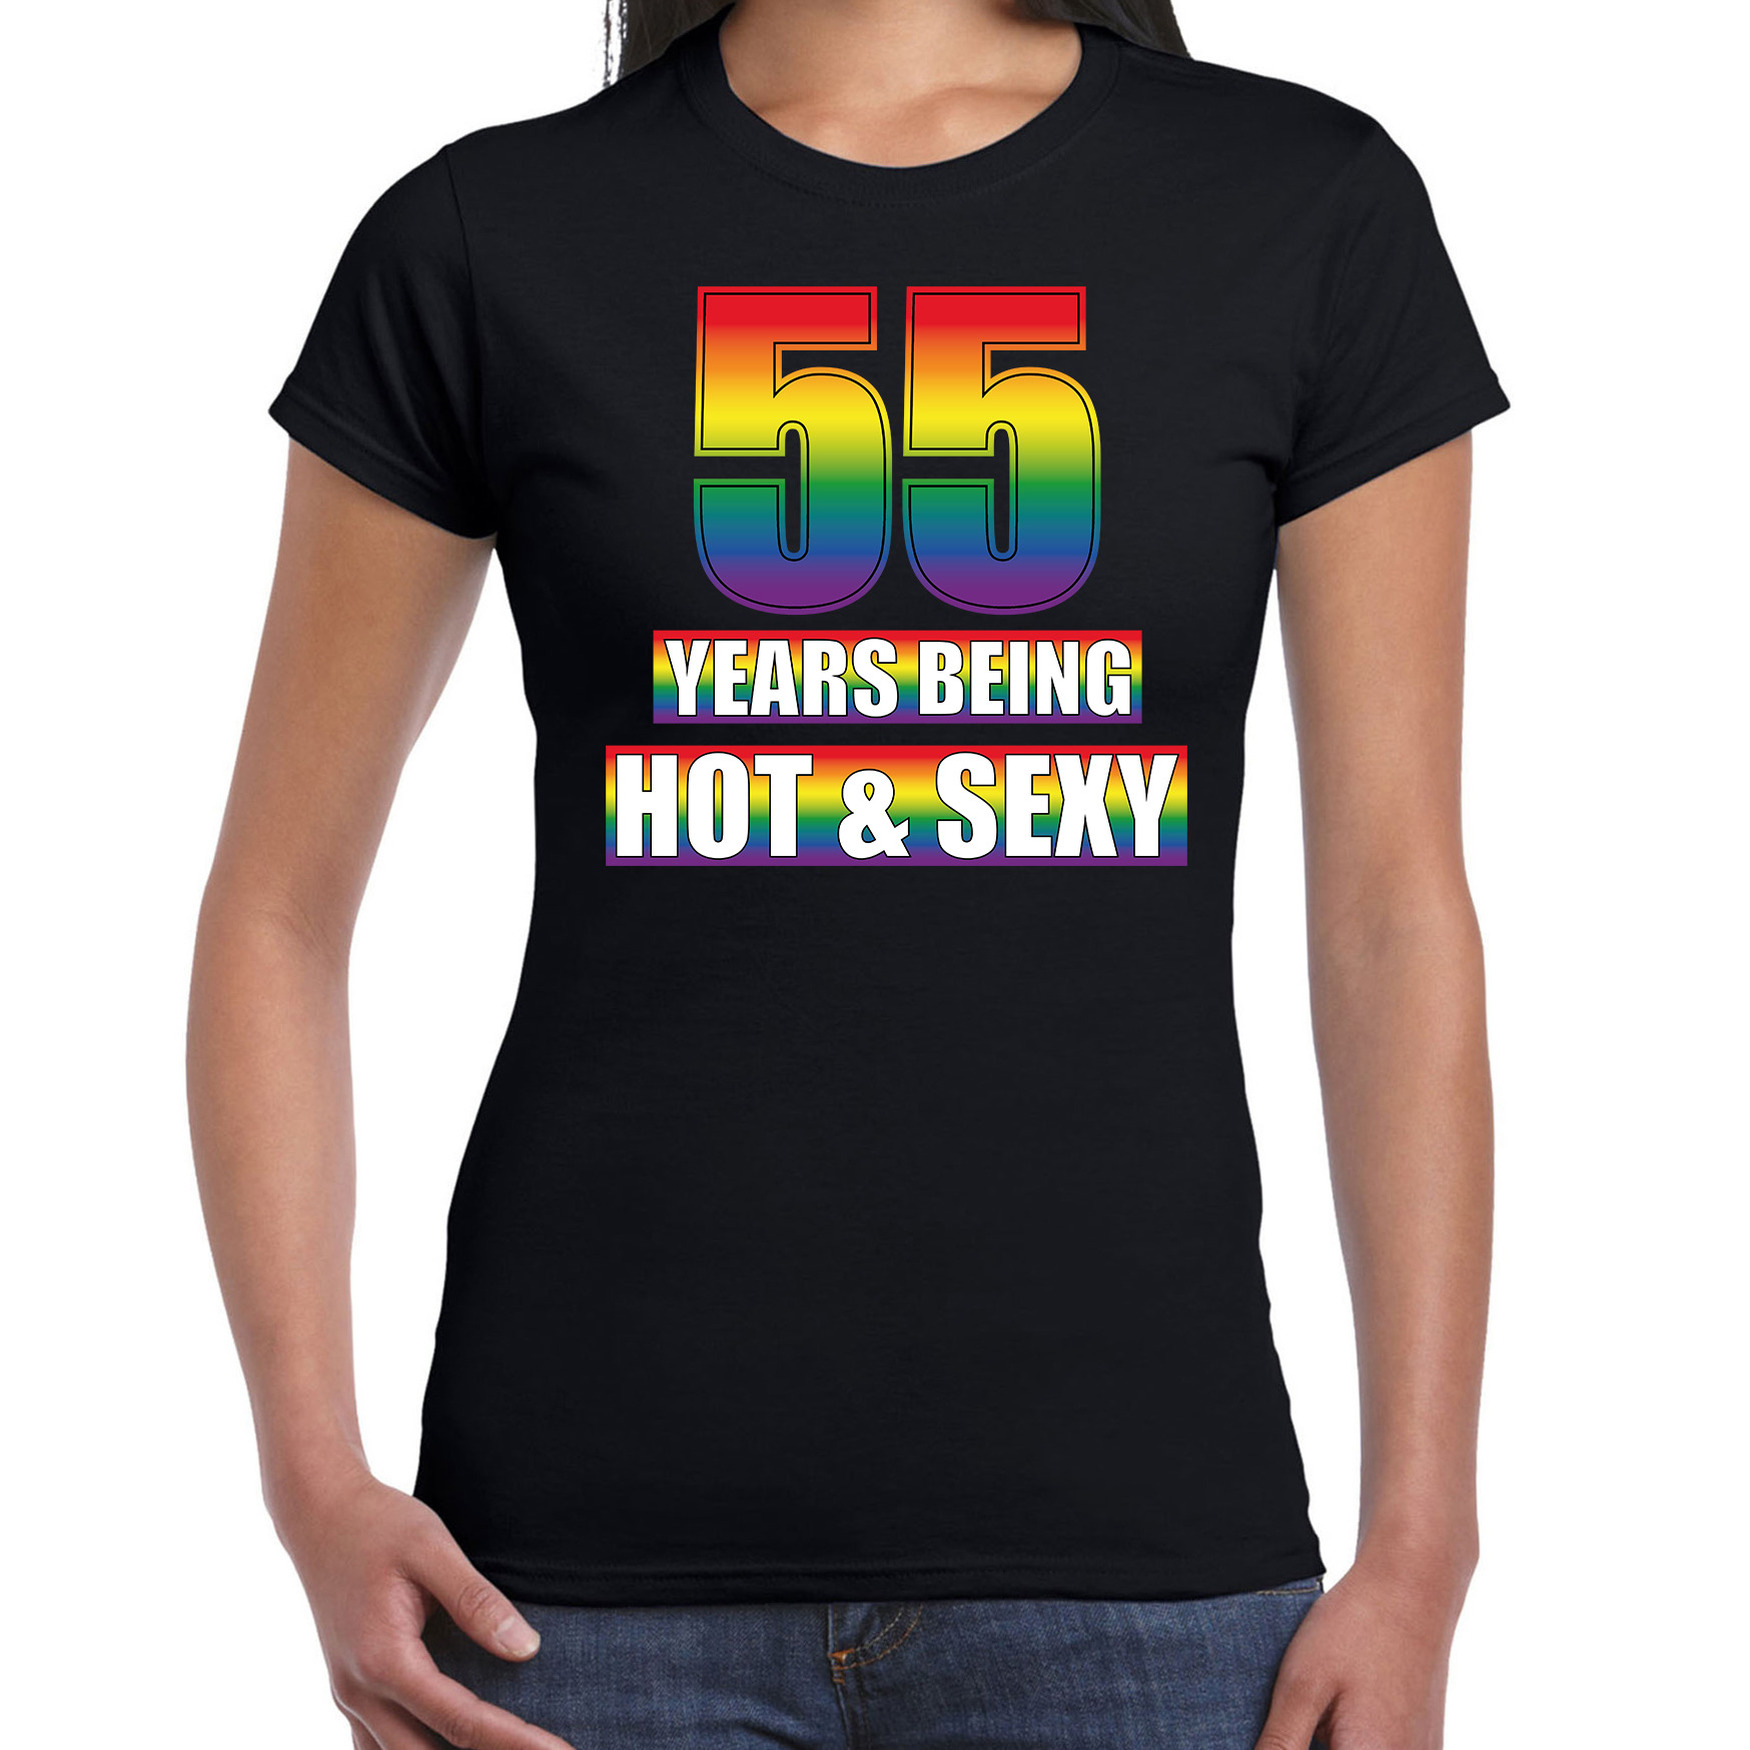 Hot en sexy 55 jaar verjaardag cadeau t-shirt zwart voor dames Gay- LHBT kleding-outfit